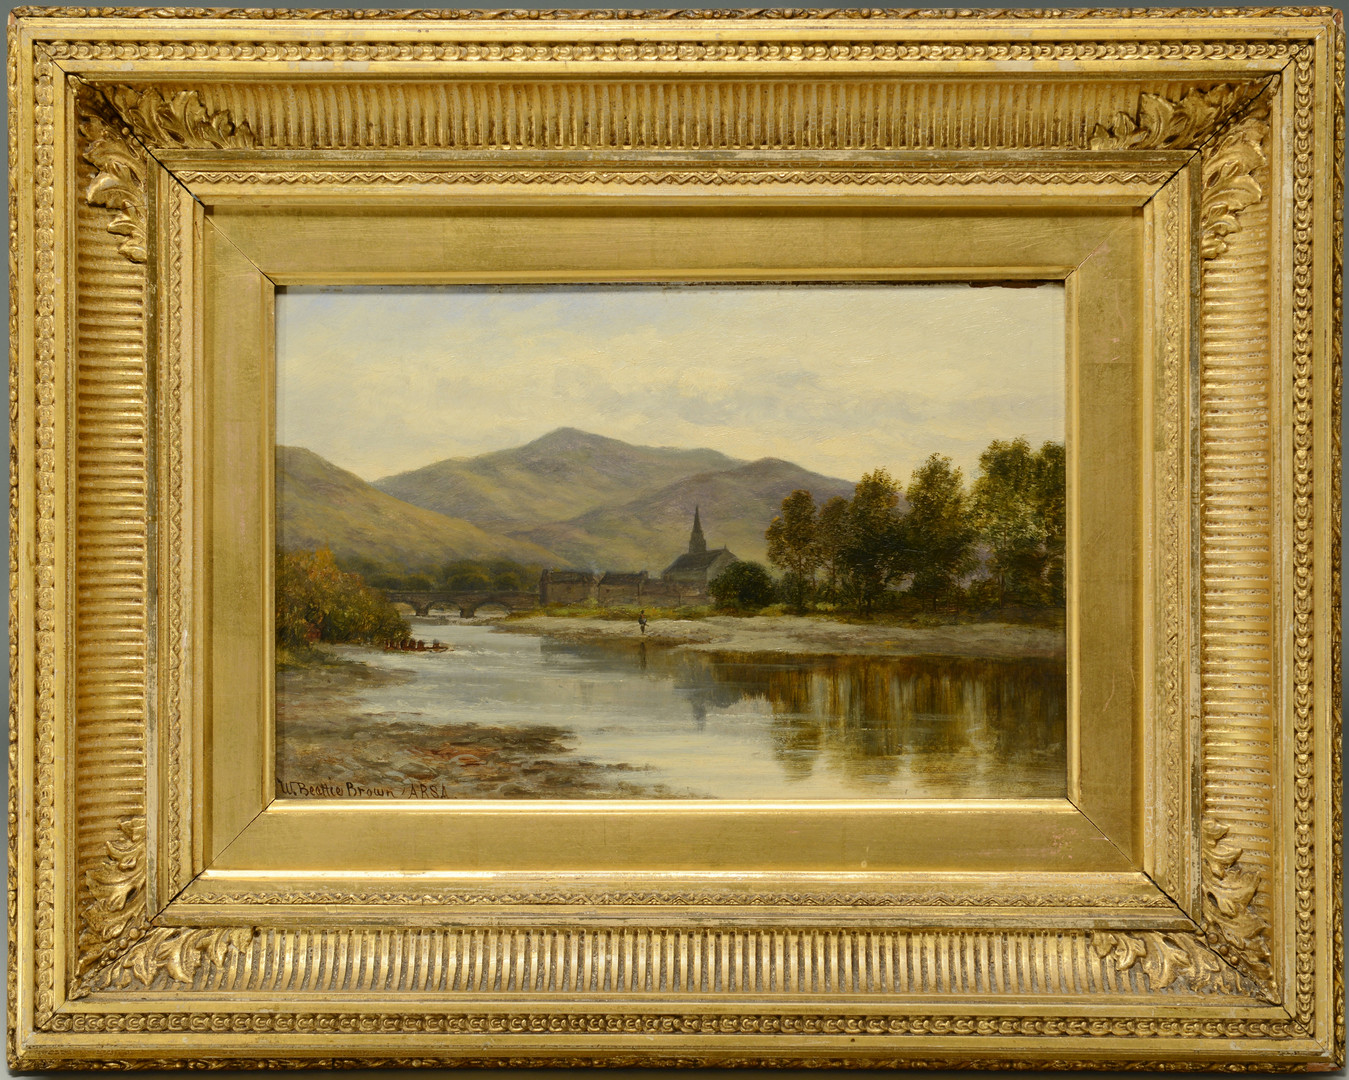 Lot 367: William B. Brown o/b Earn River Landscape